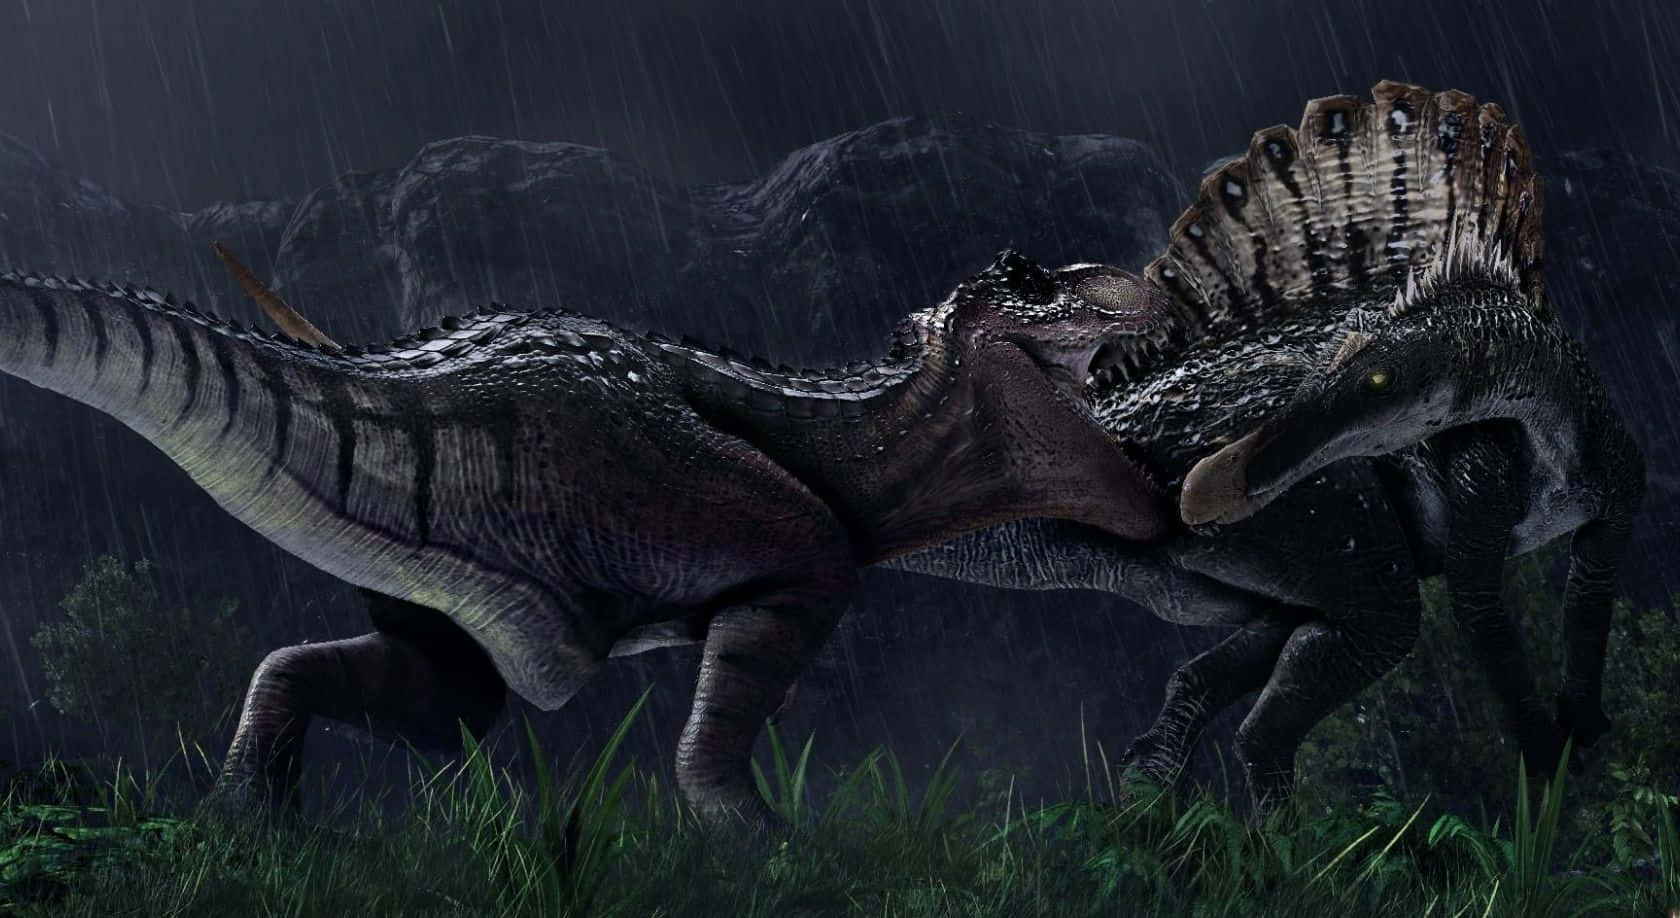 Dosdinosaurios Están Peleando Bajo La Lluvia. Fondo de pantalla